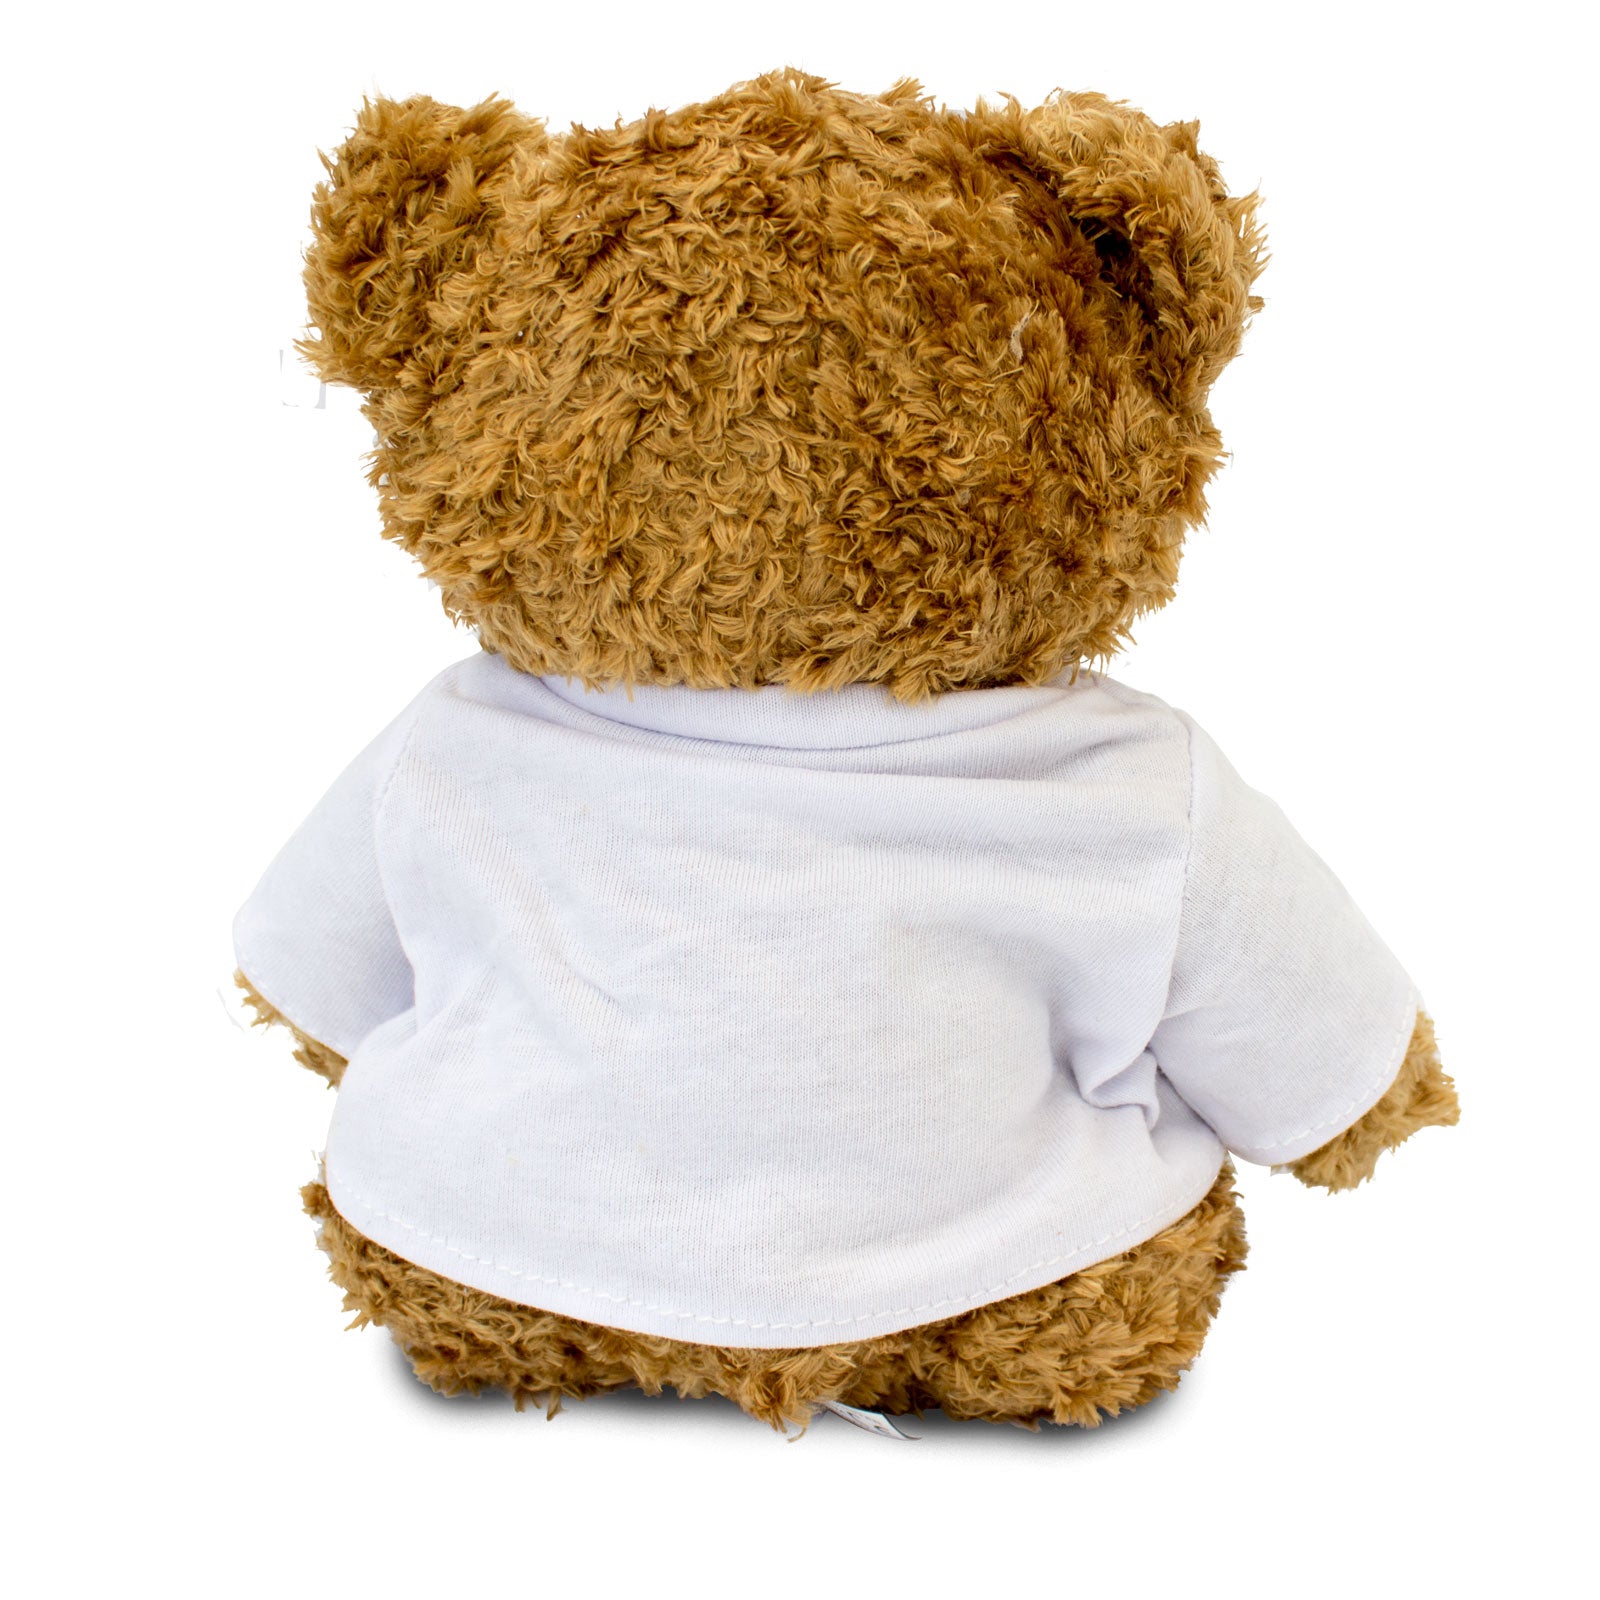 I Love Andi - Teddy Bear